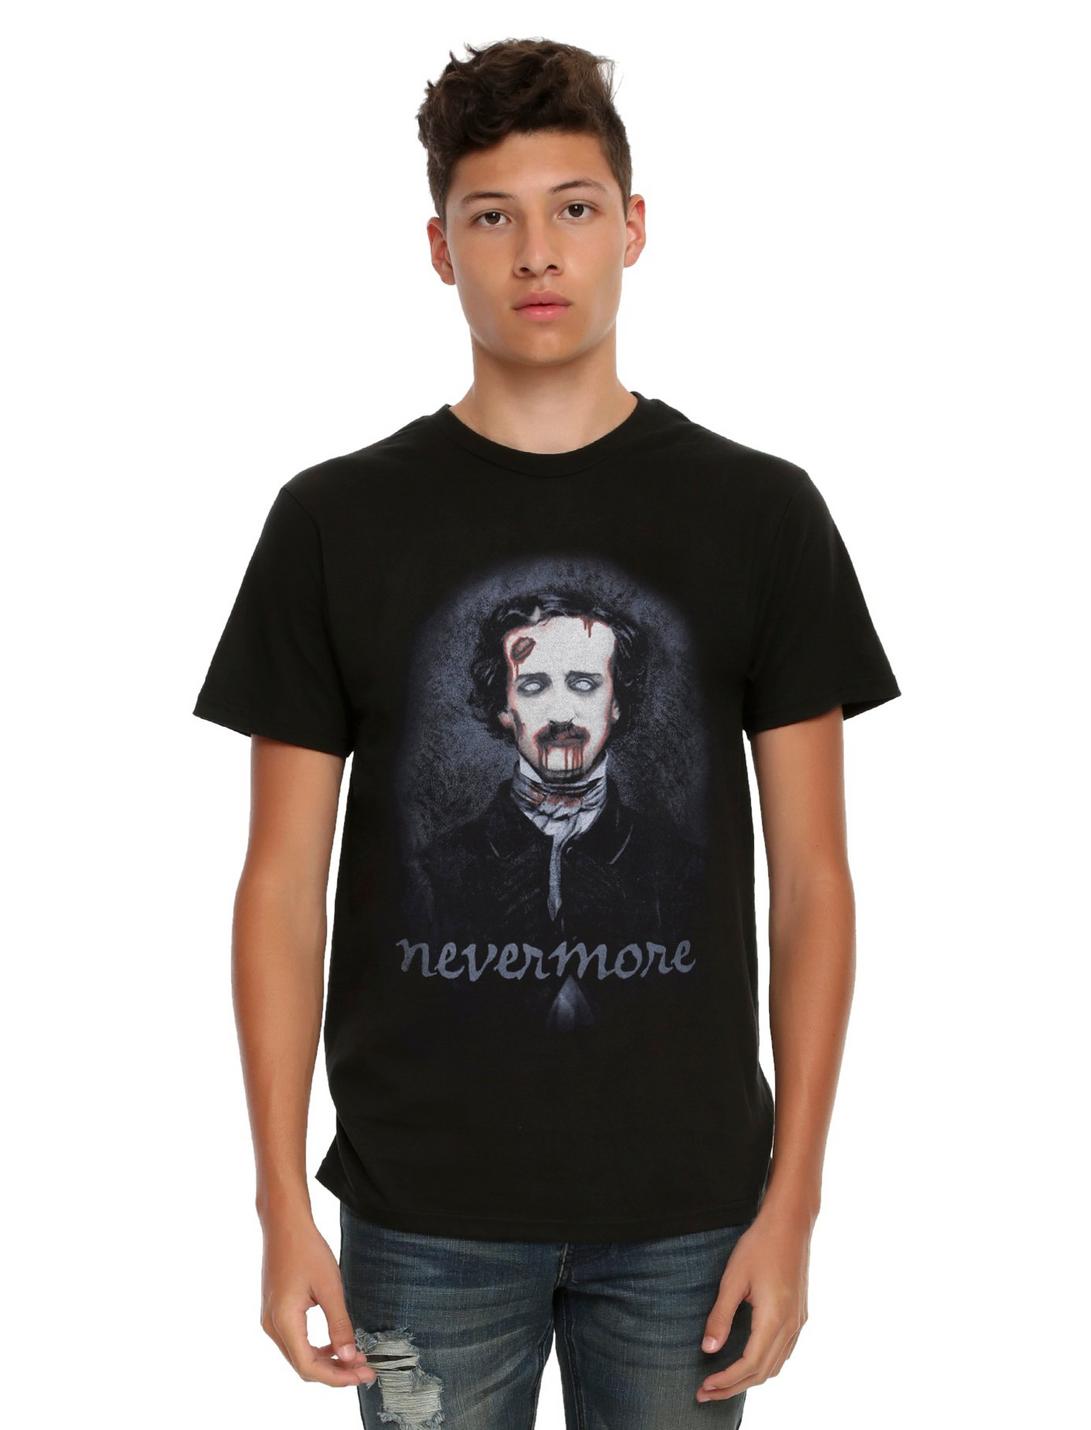 Poe NevermoreT-Shirt, BLACK, hi-res